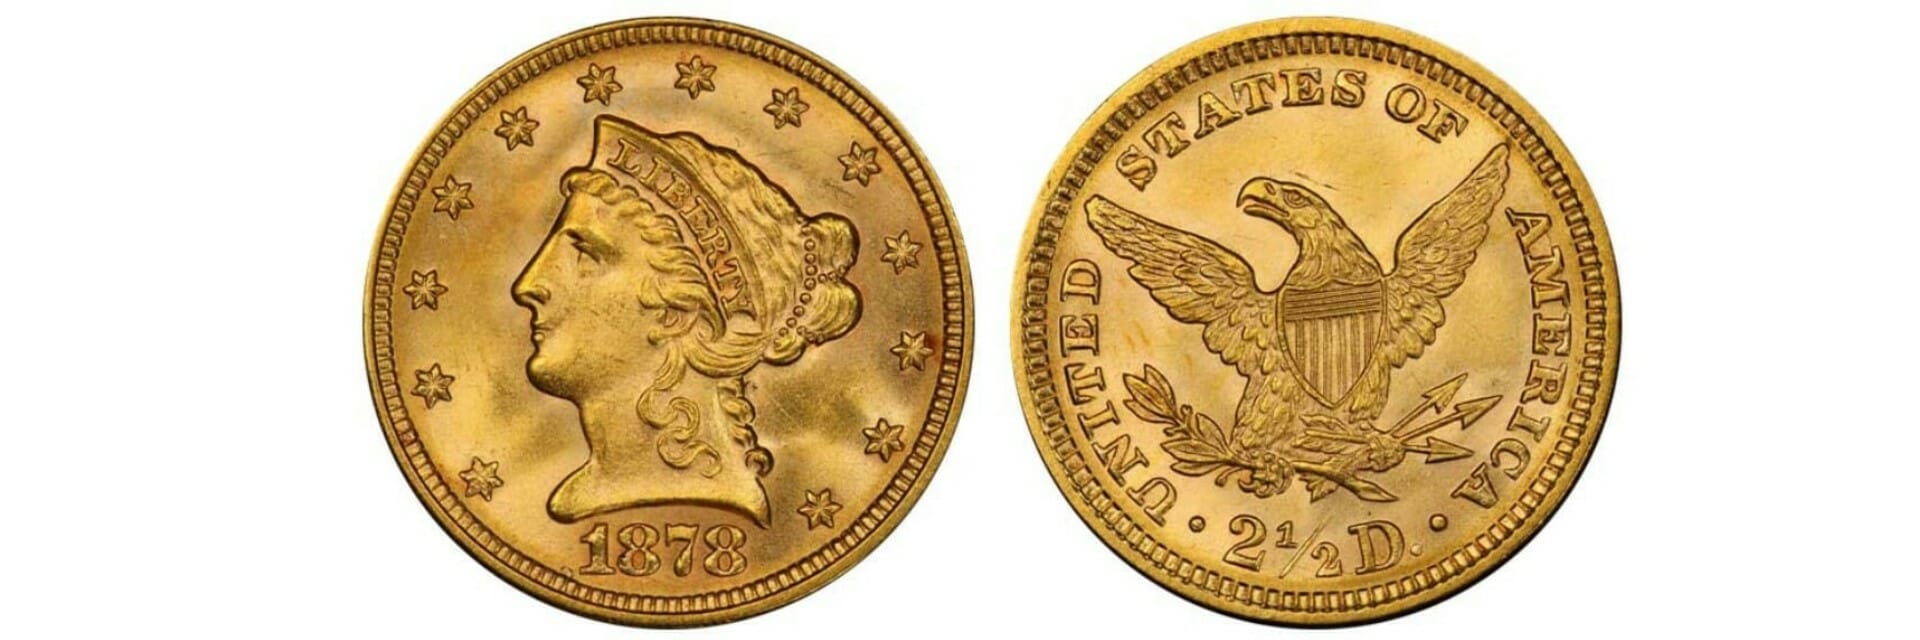 1878 $2.50 gold liberty Quarter Eagle